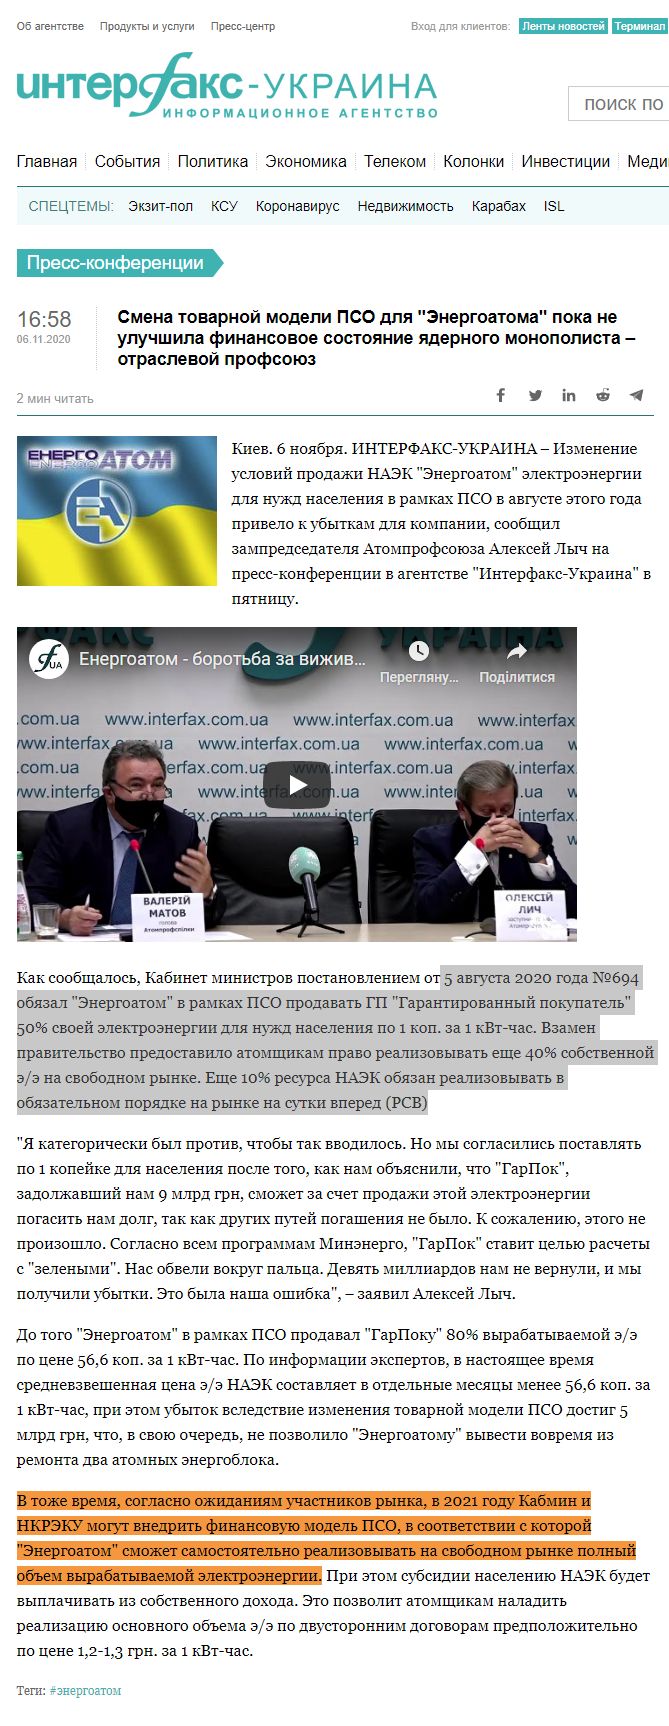 https://interfax.com.ua/news/press-conference/701613.html